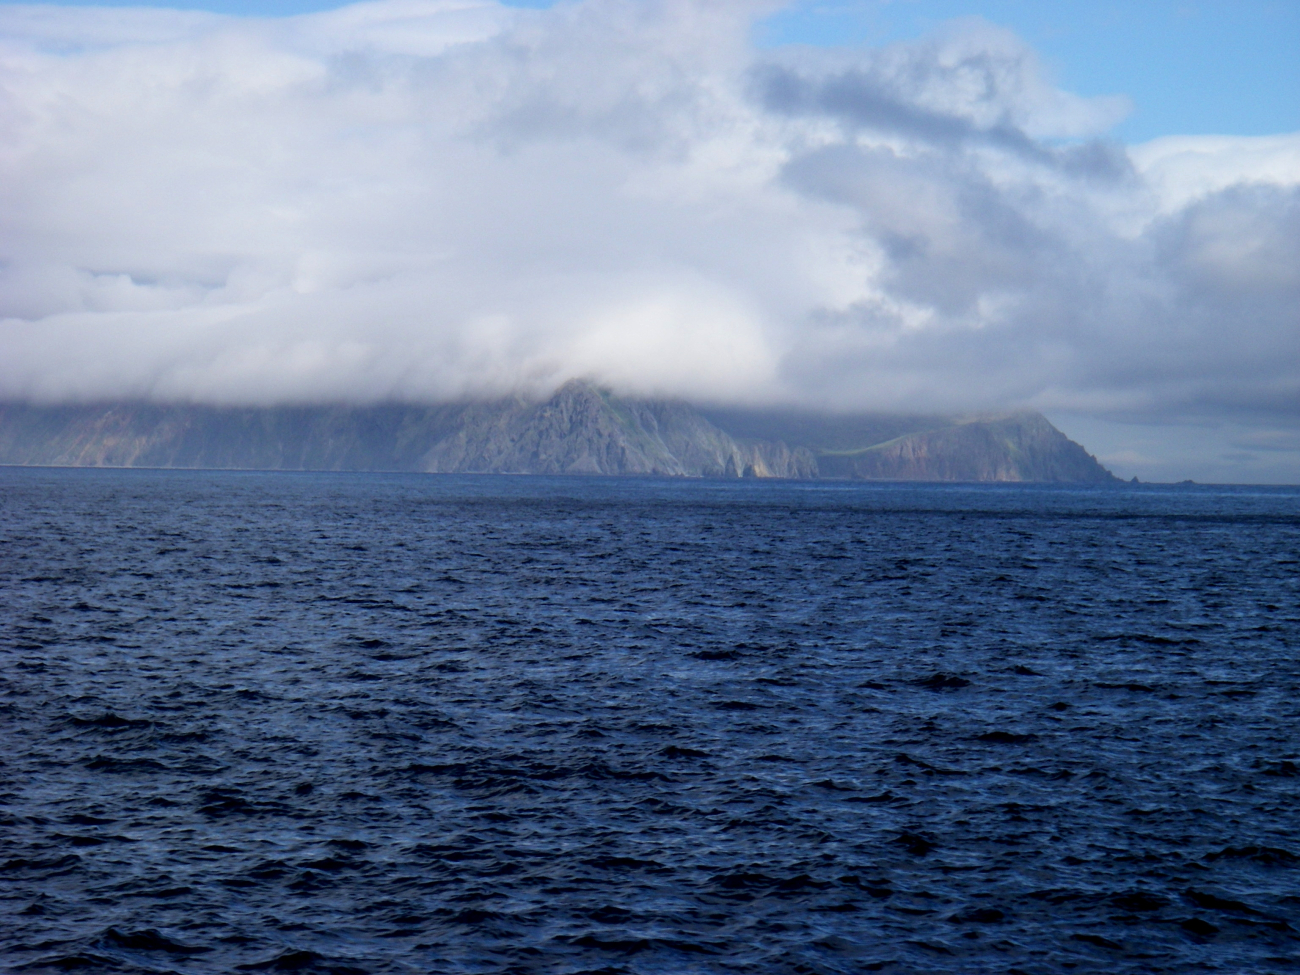 A cloud enshrouded Aleutian Island coastline